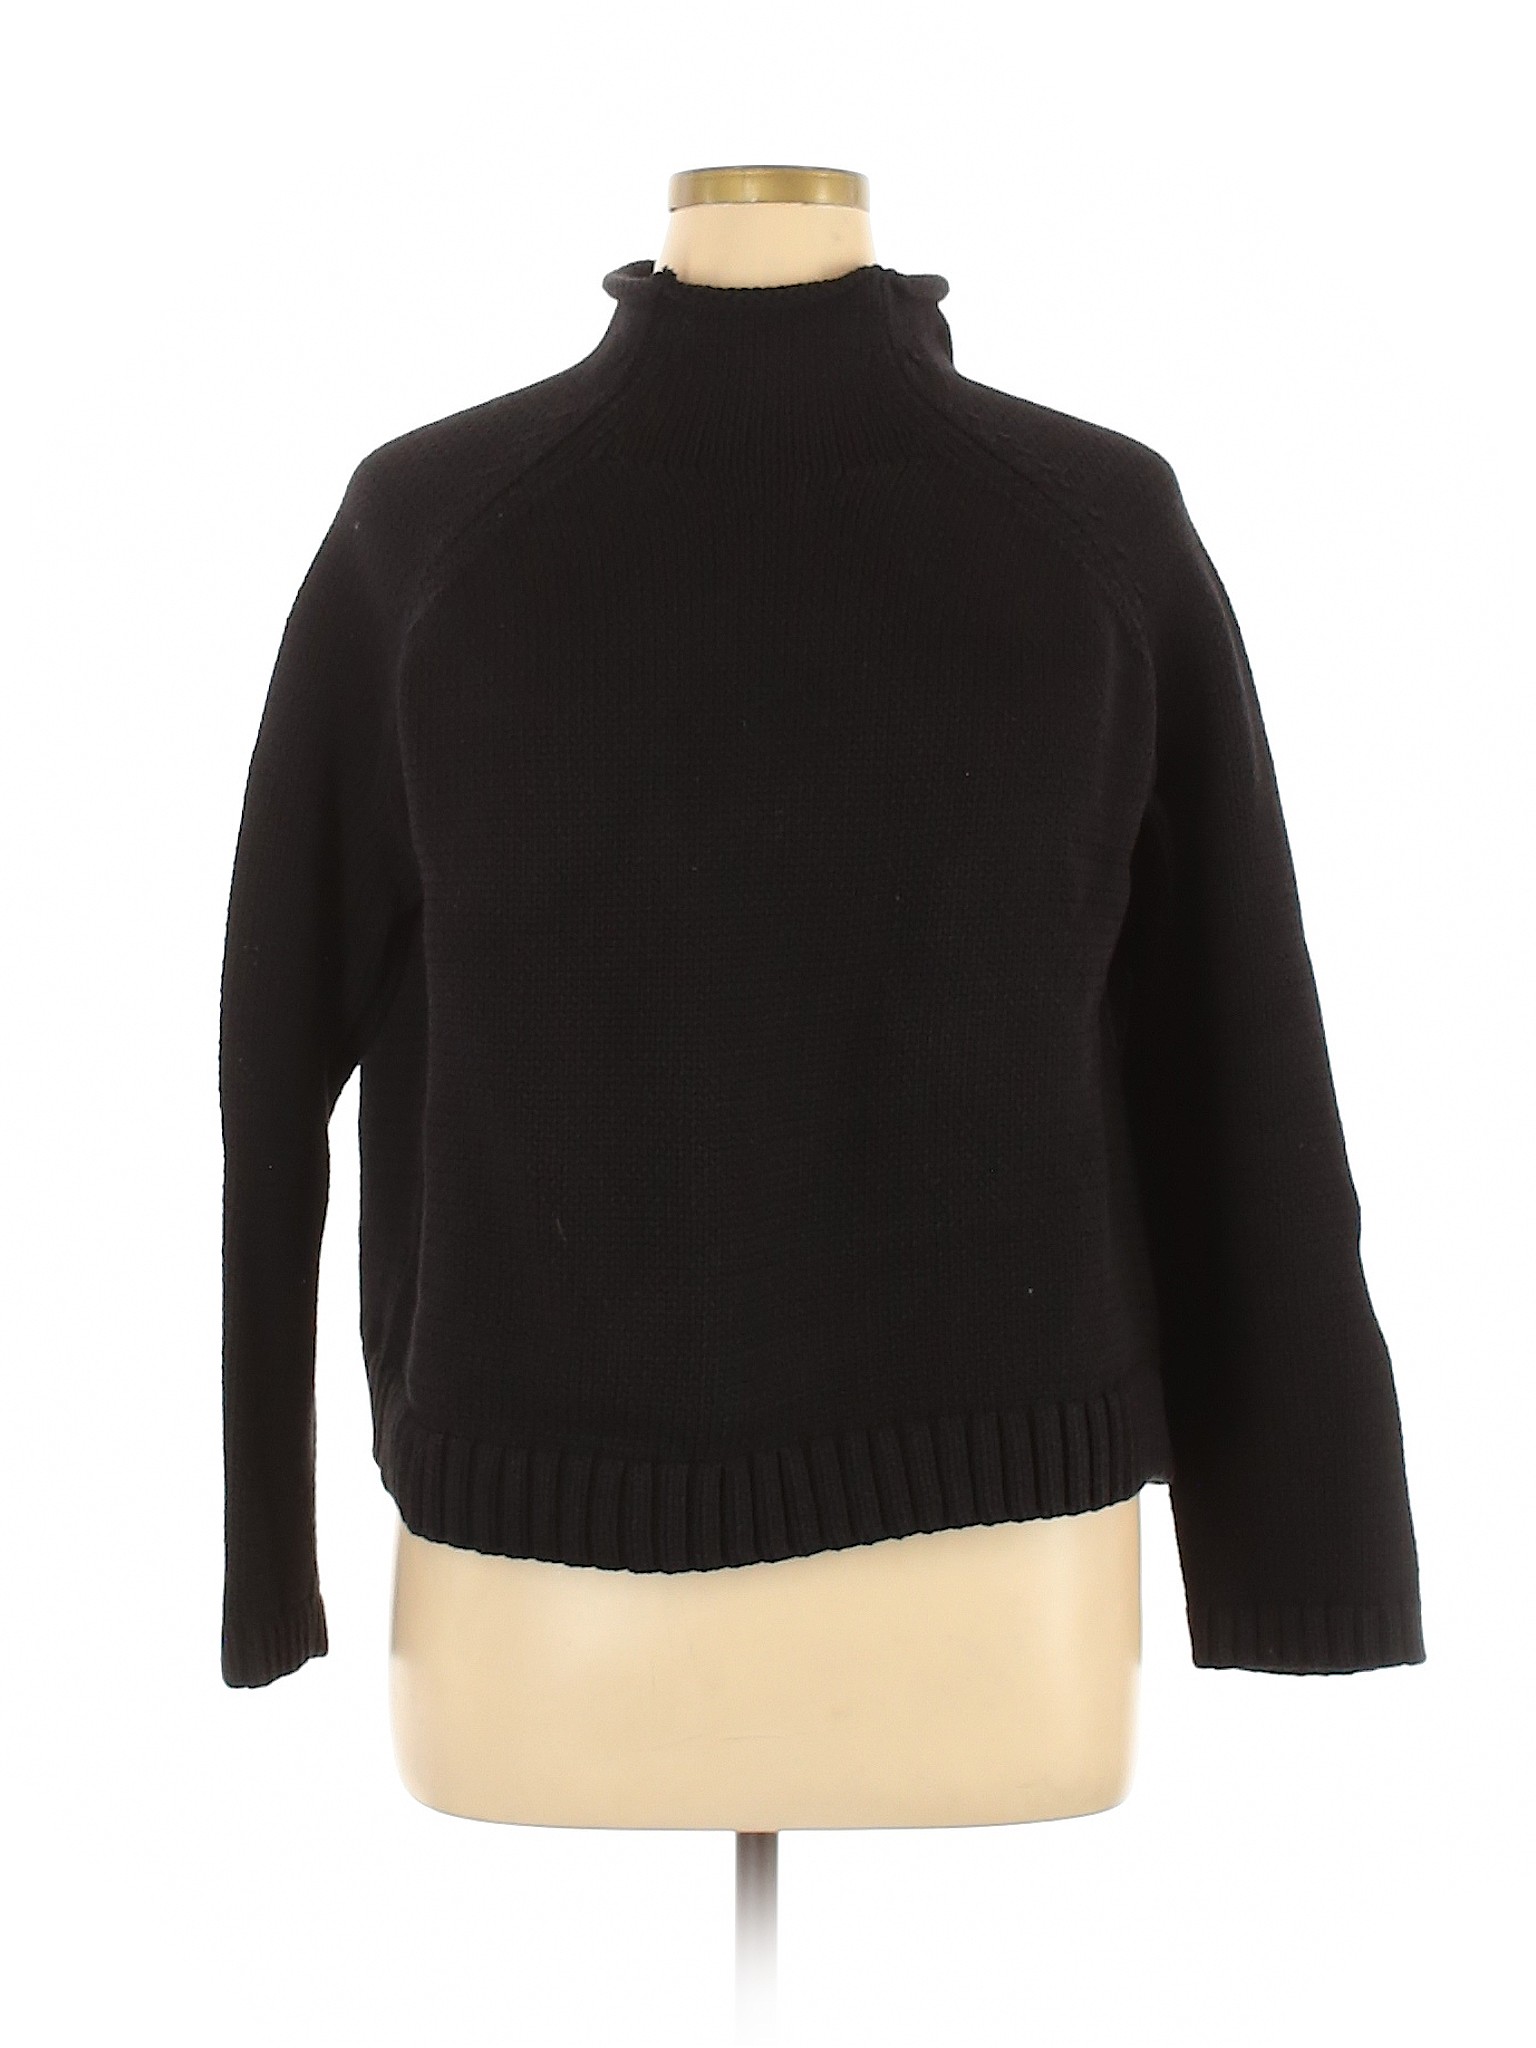 Ann Taylor Women Black Pullover Sweater XL | eBay